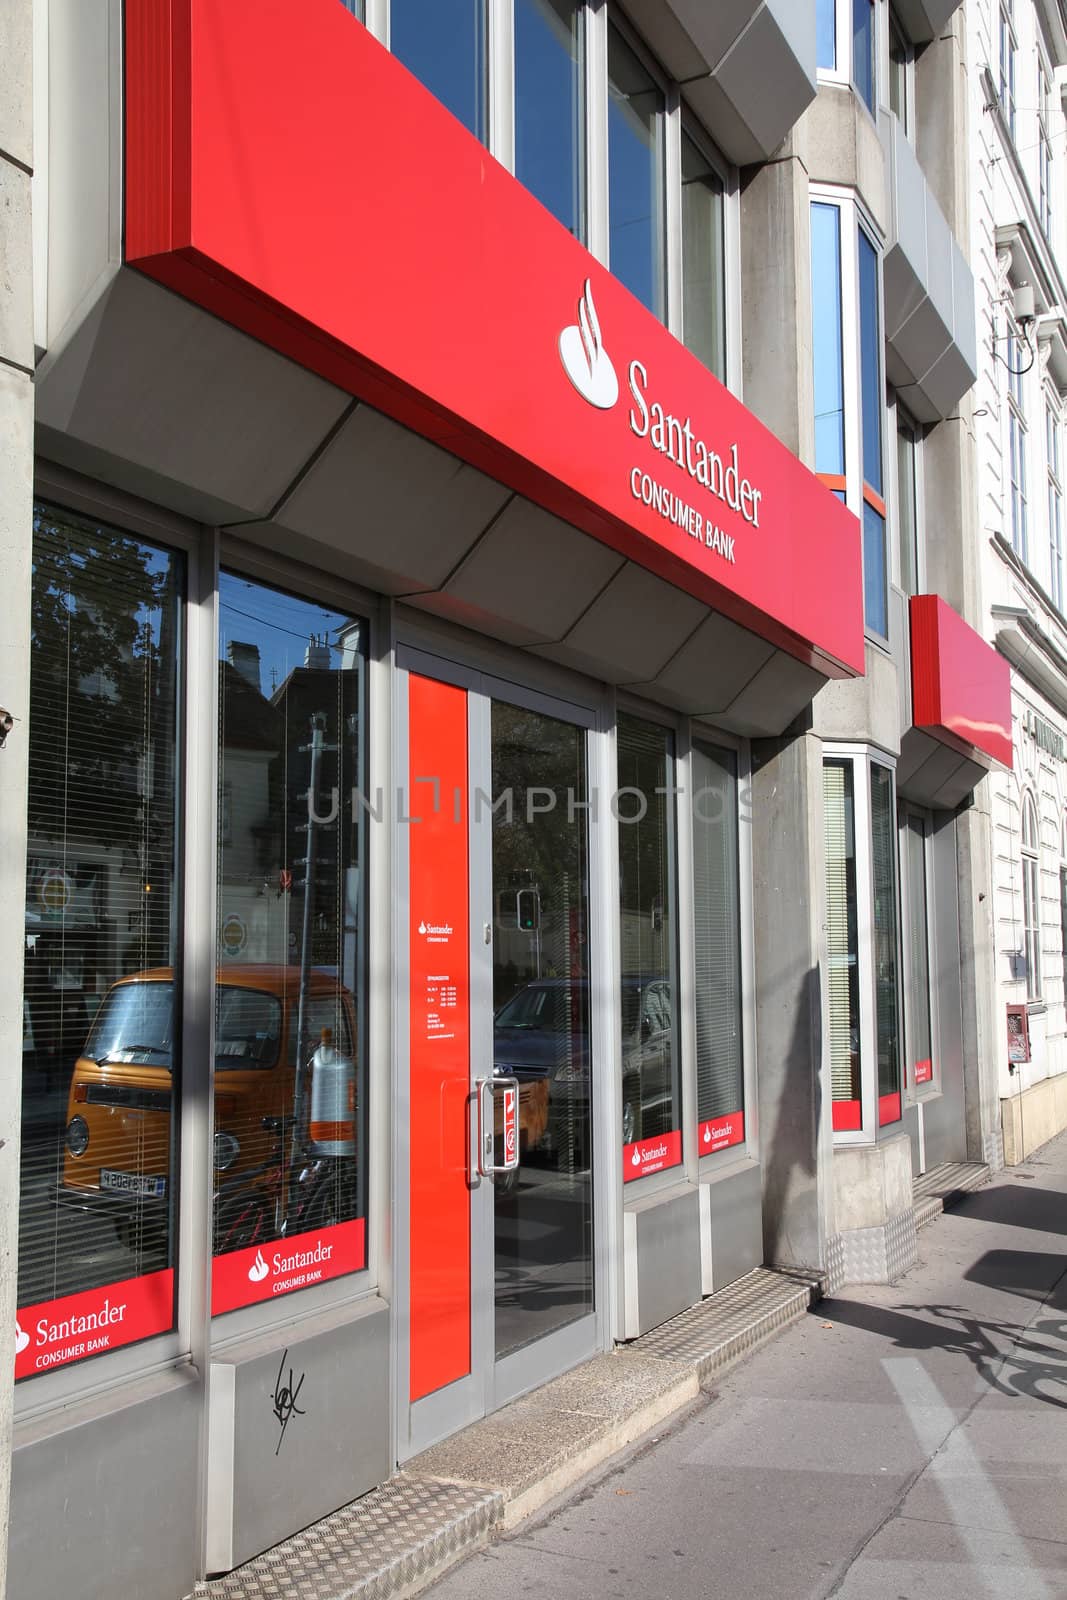 VIENNA - SEPTEMBER 6: Santander Bank branch on September 6, 2011 in Vienna. Santander Bank is the largest in Eurozone according to Financial Times Global 500.